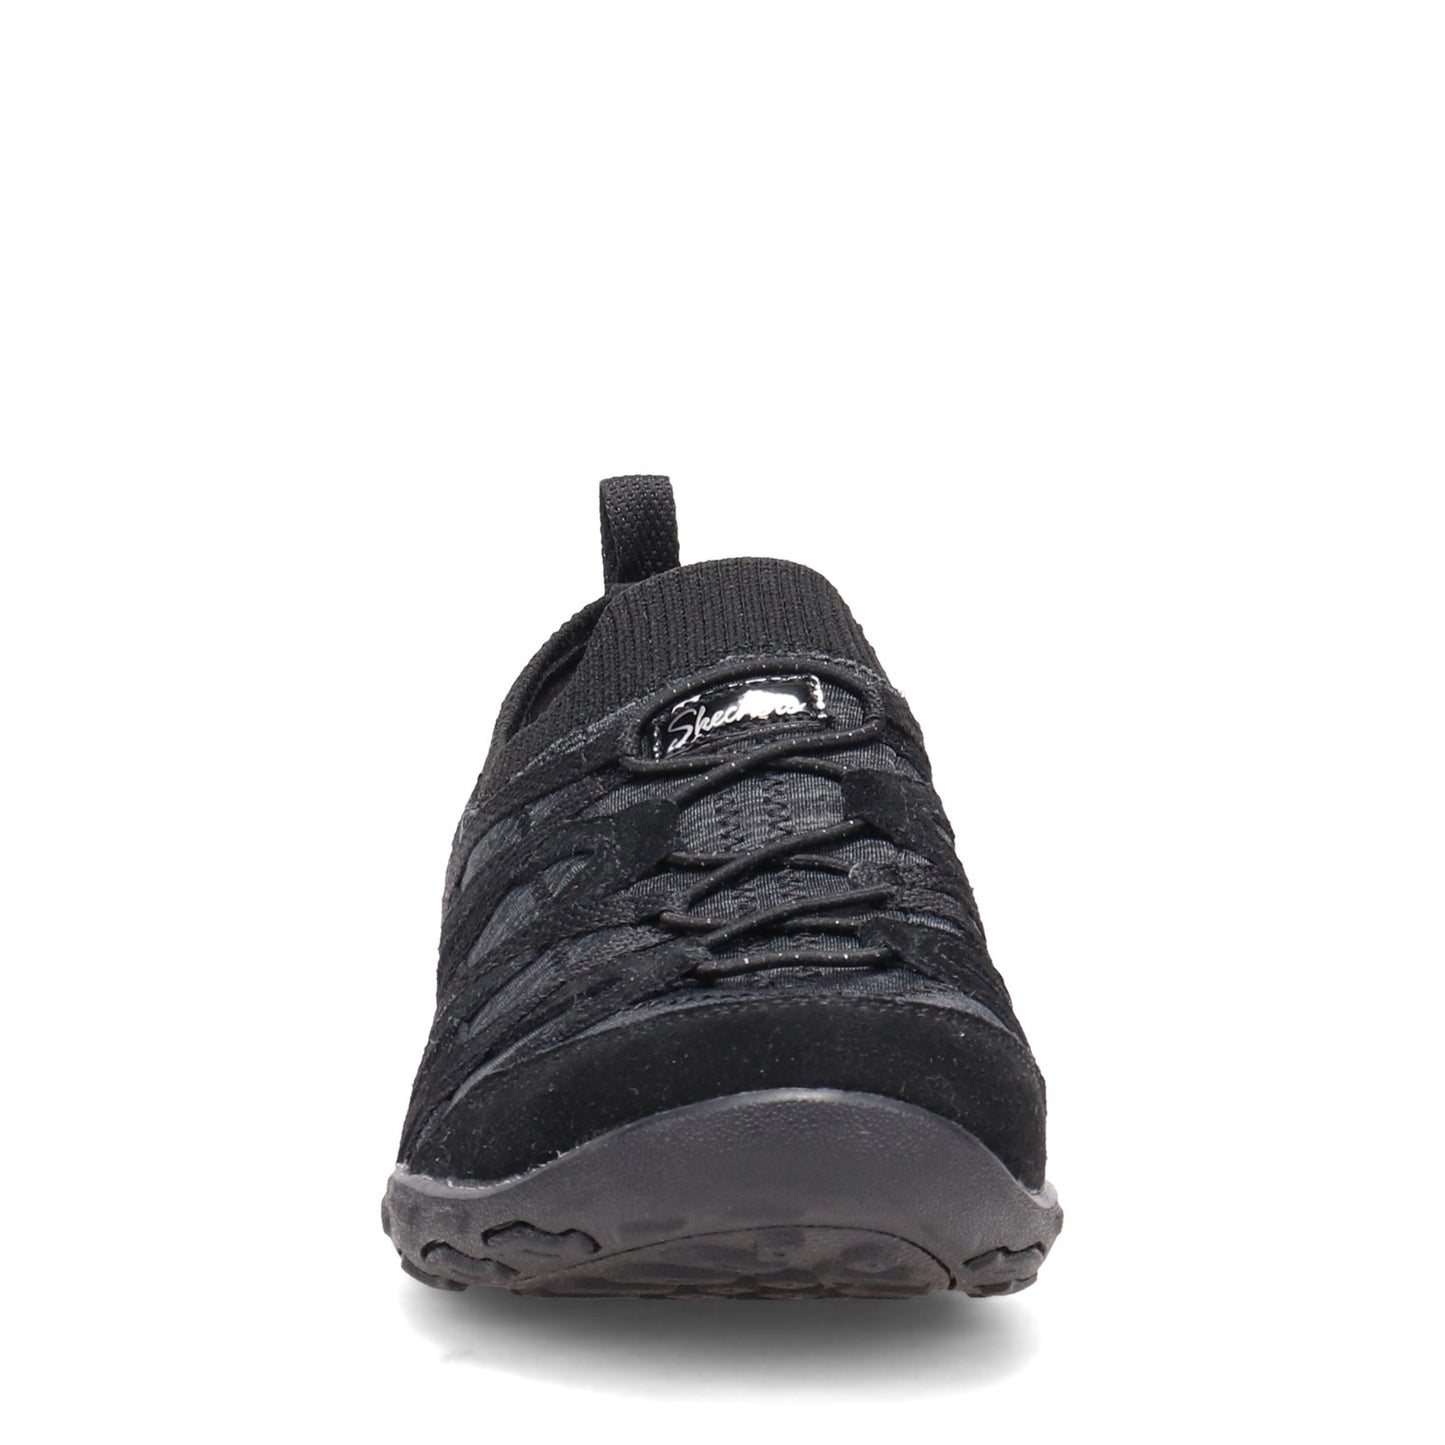 Peltz Shoes  Women's Skechers Arch Fit Comfy - Bold Statement Slip-On BLACK 100275-BLK